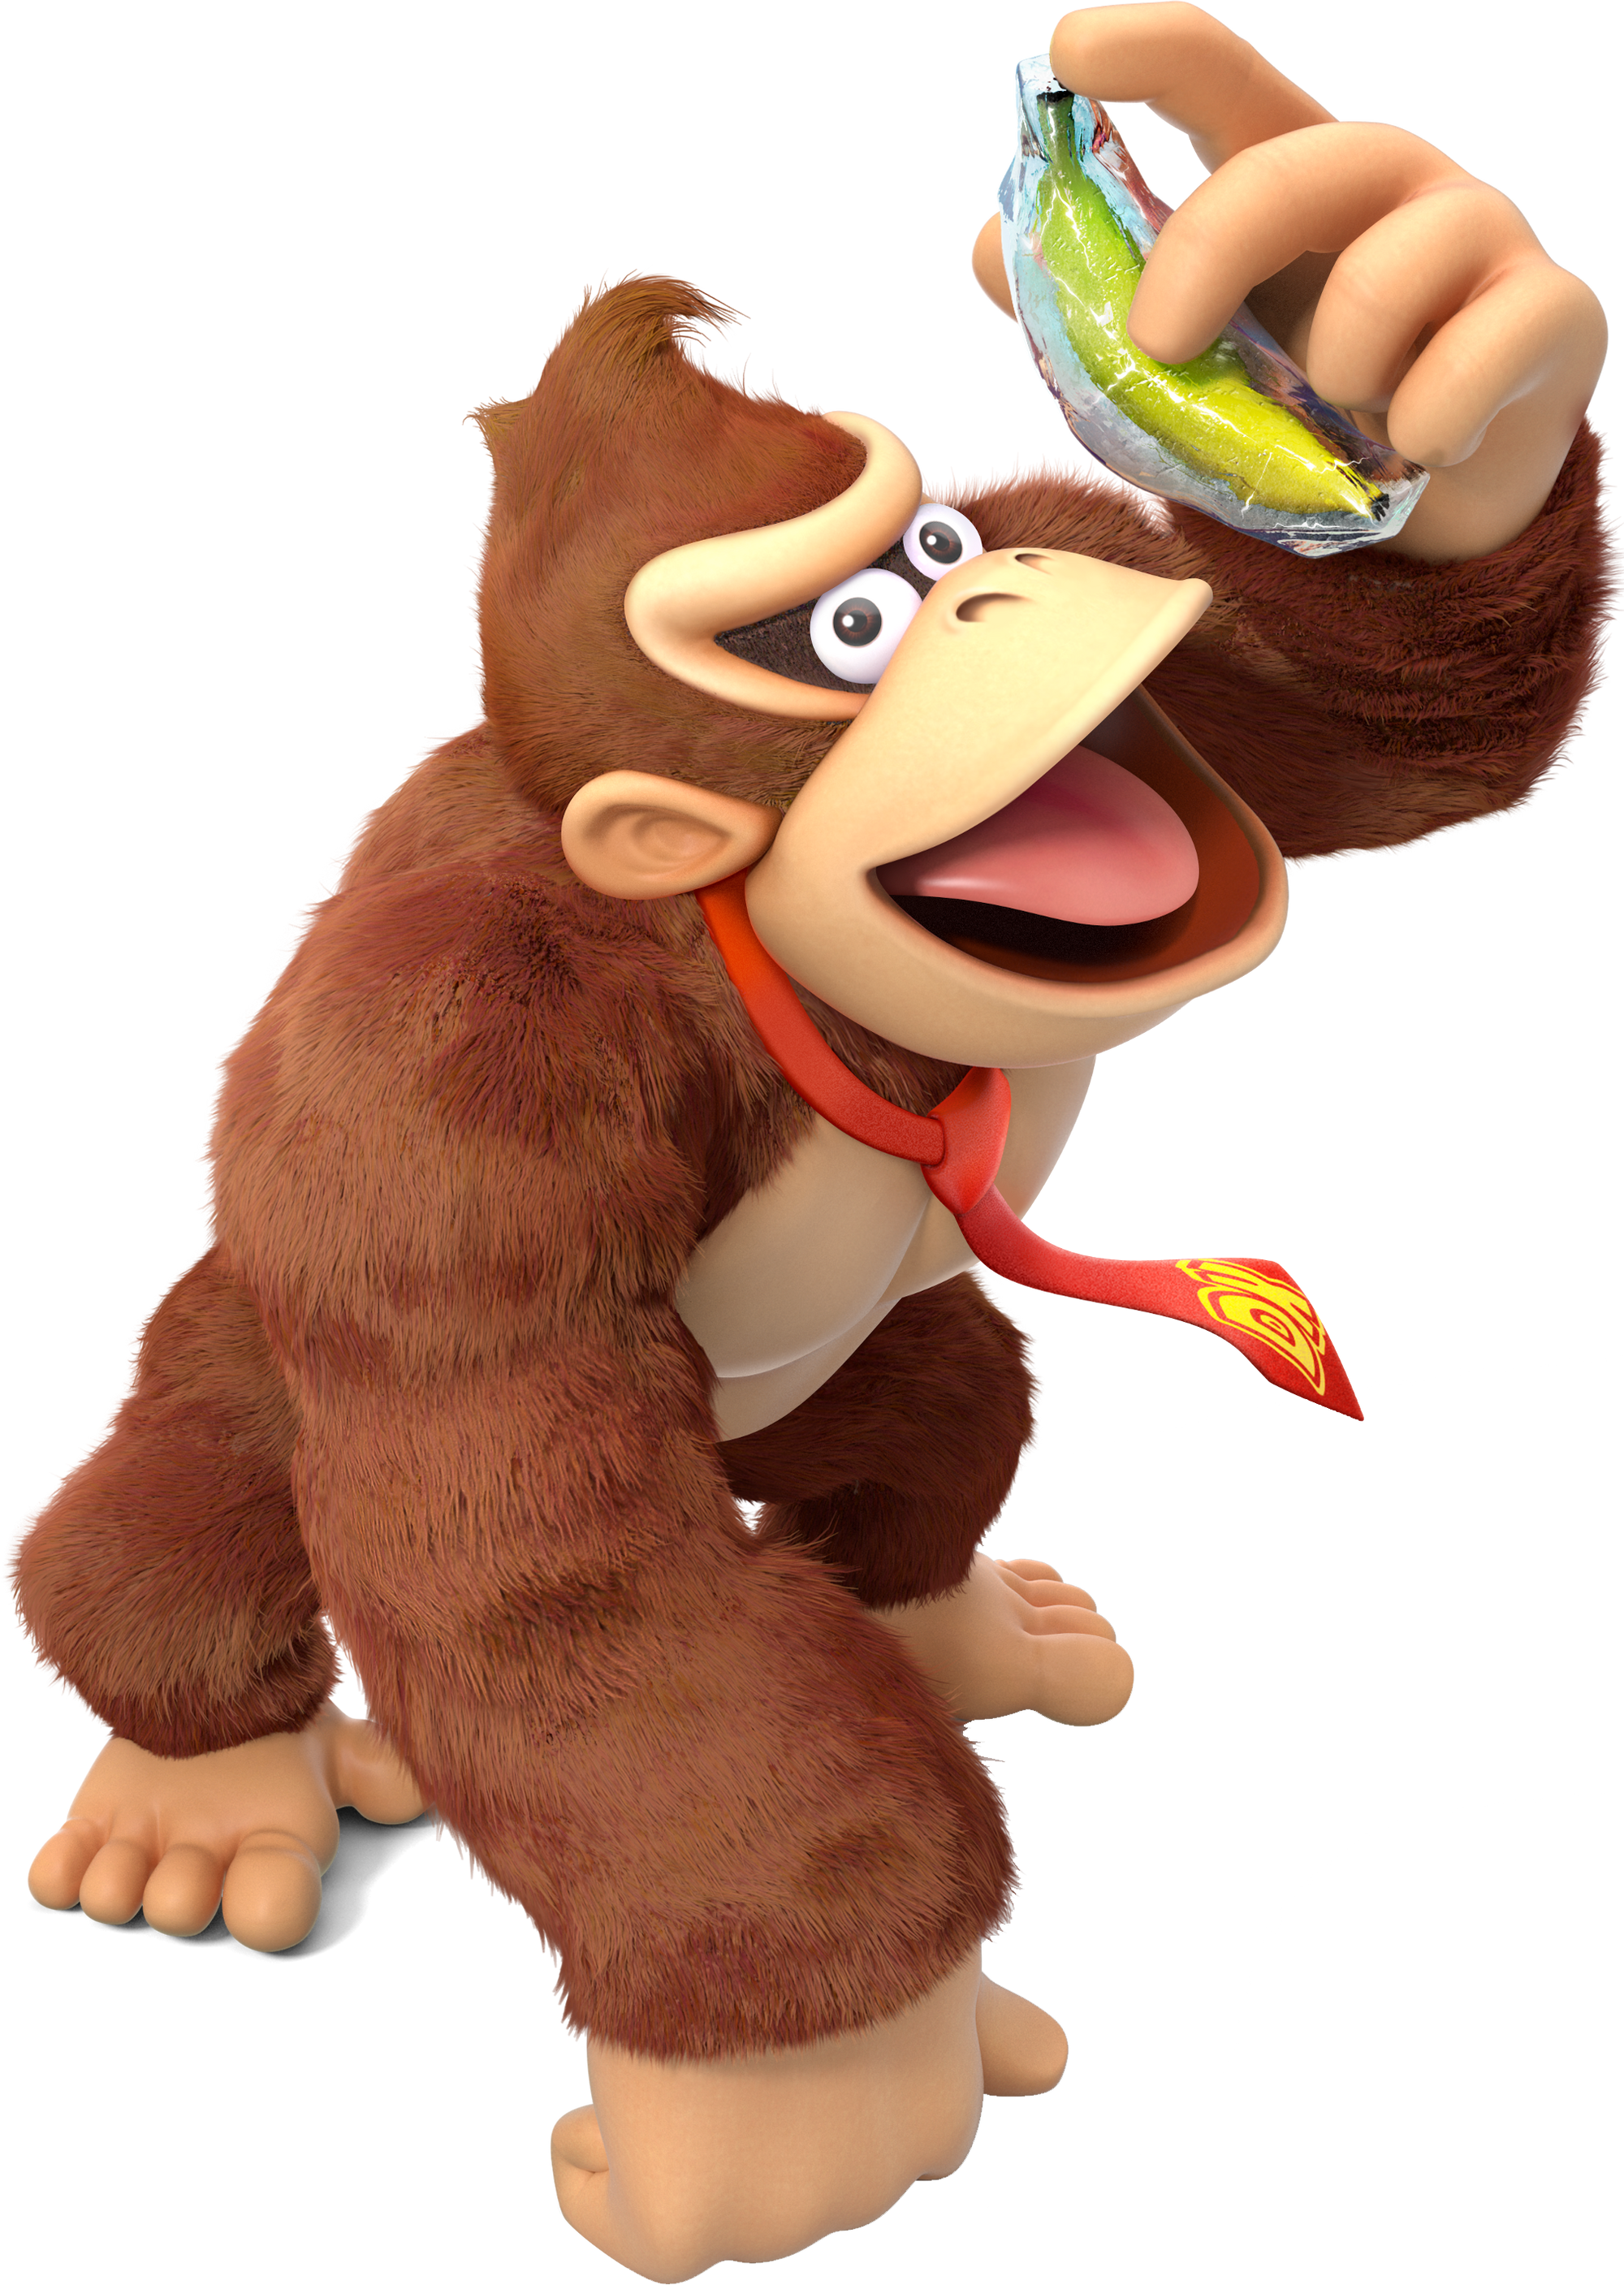 Donkey Kong - Smashpedia, the Super Smash Bros. wiki.